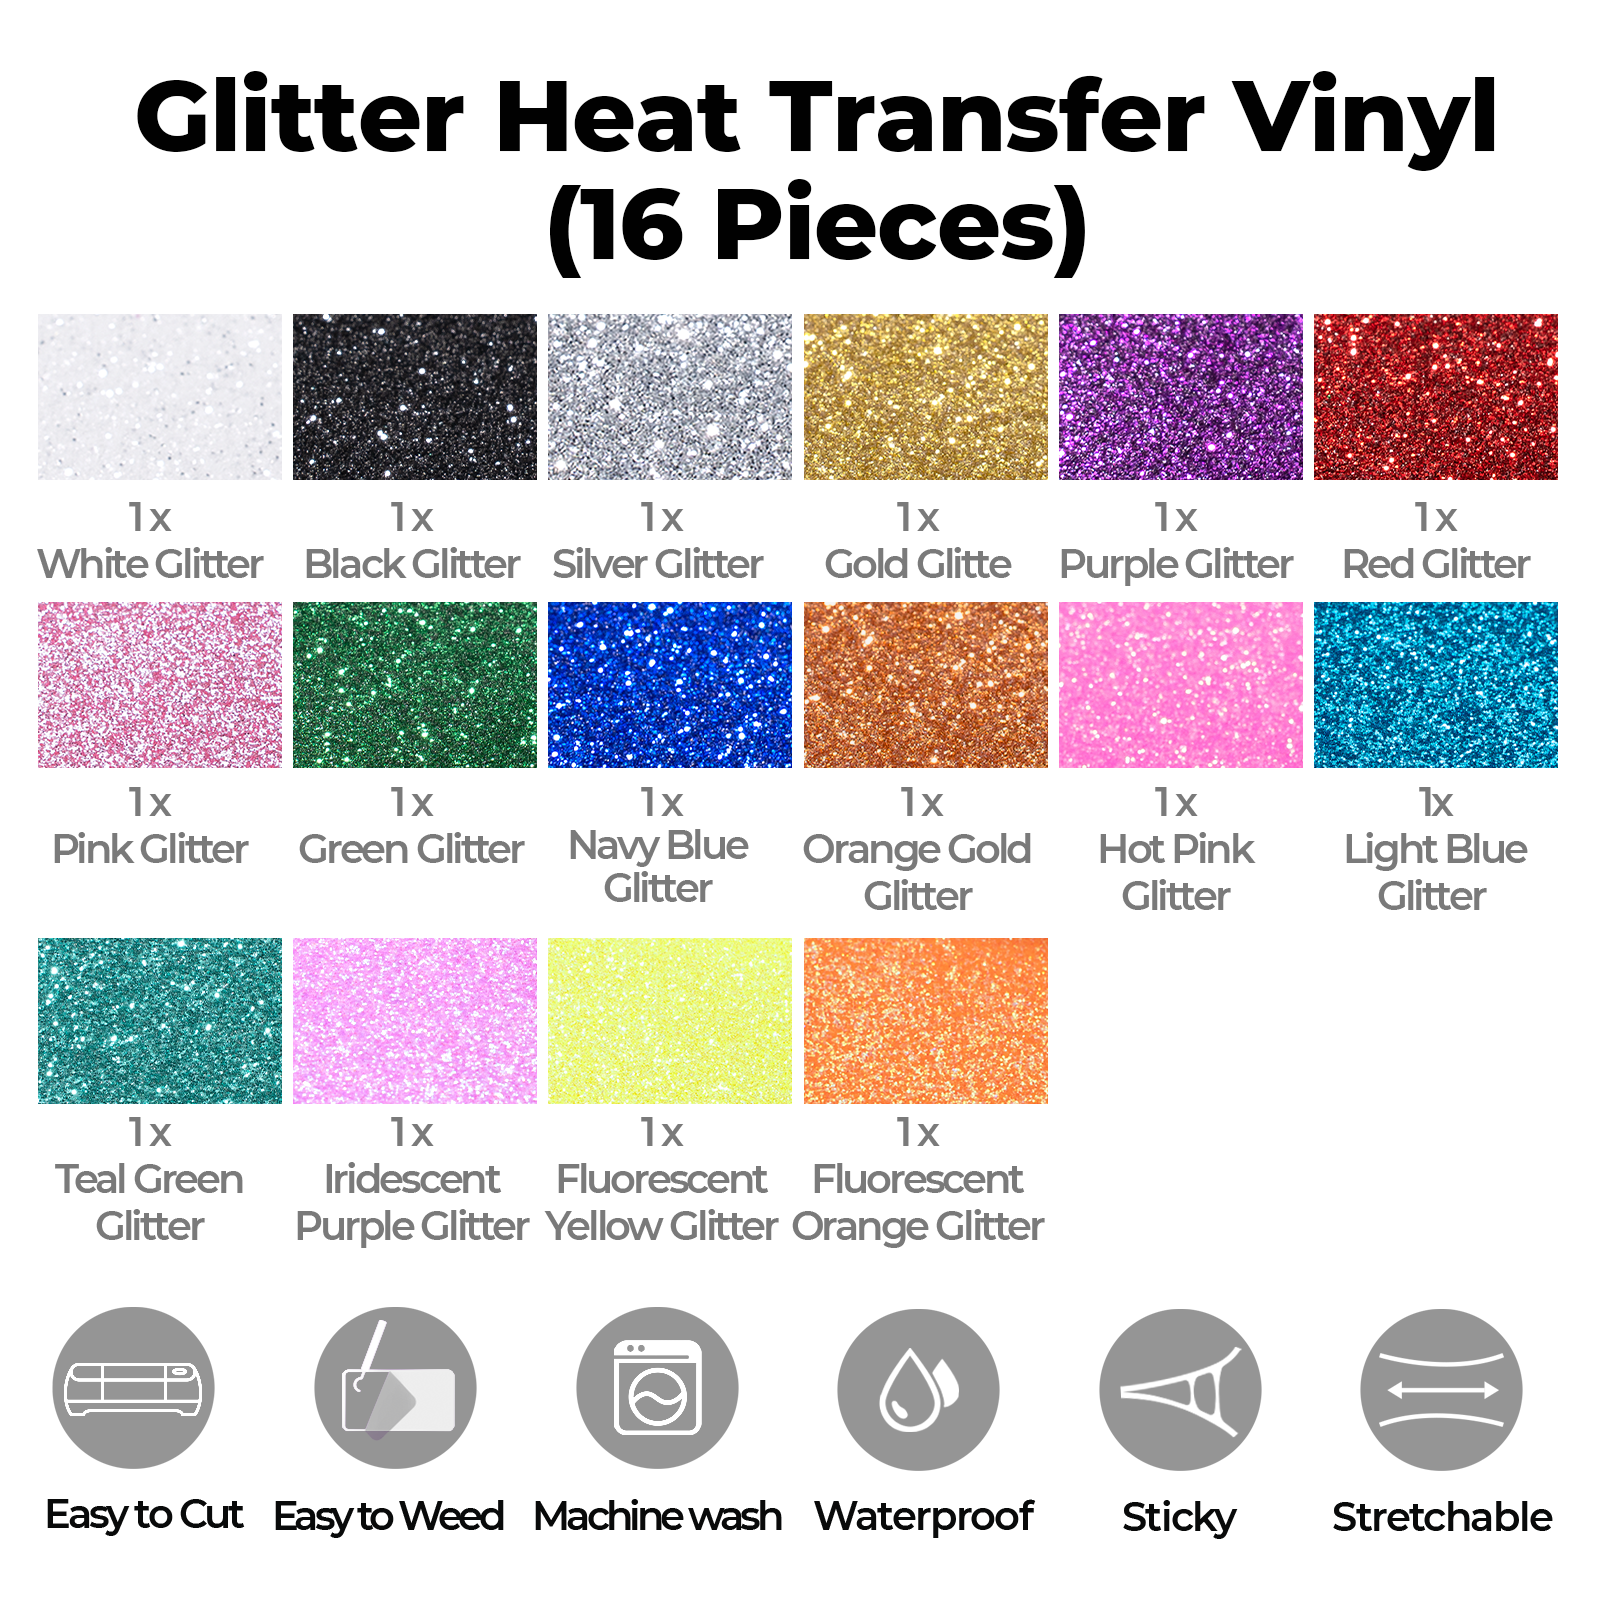 Glitter Heat Transfer Vinyl (16pcs)